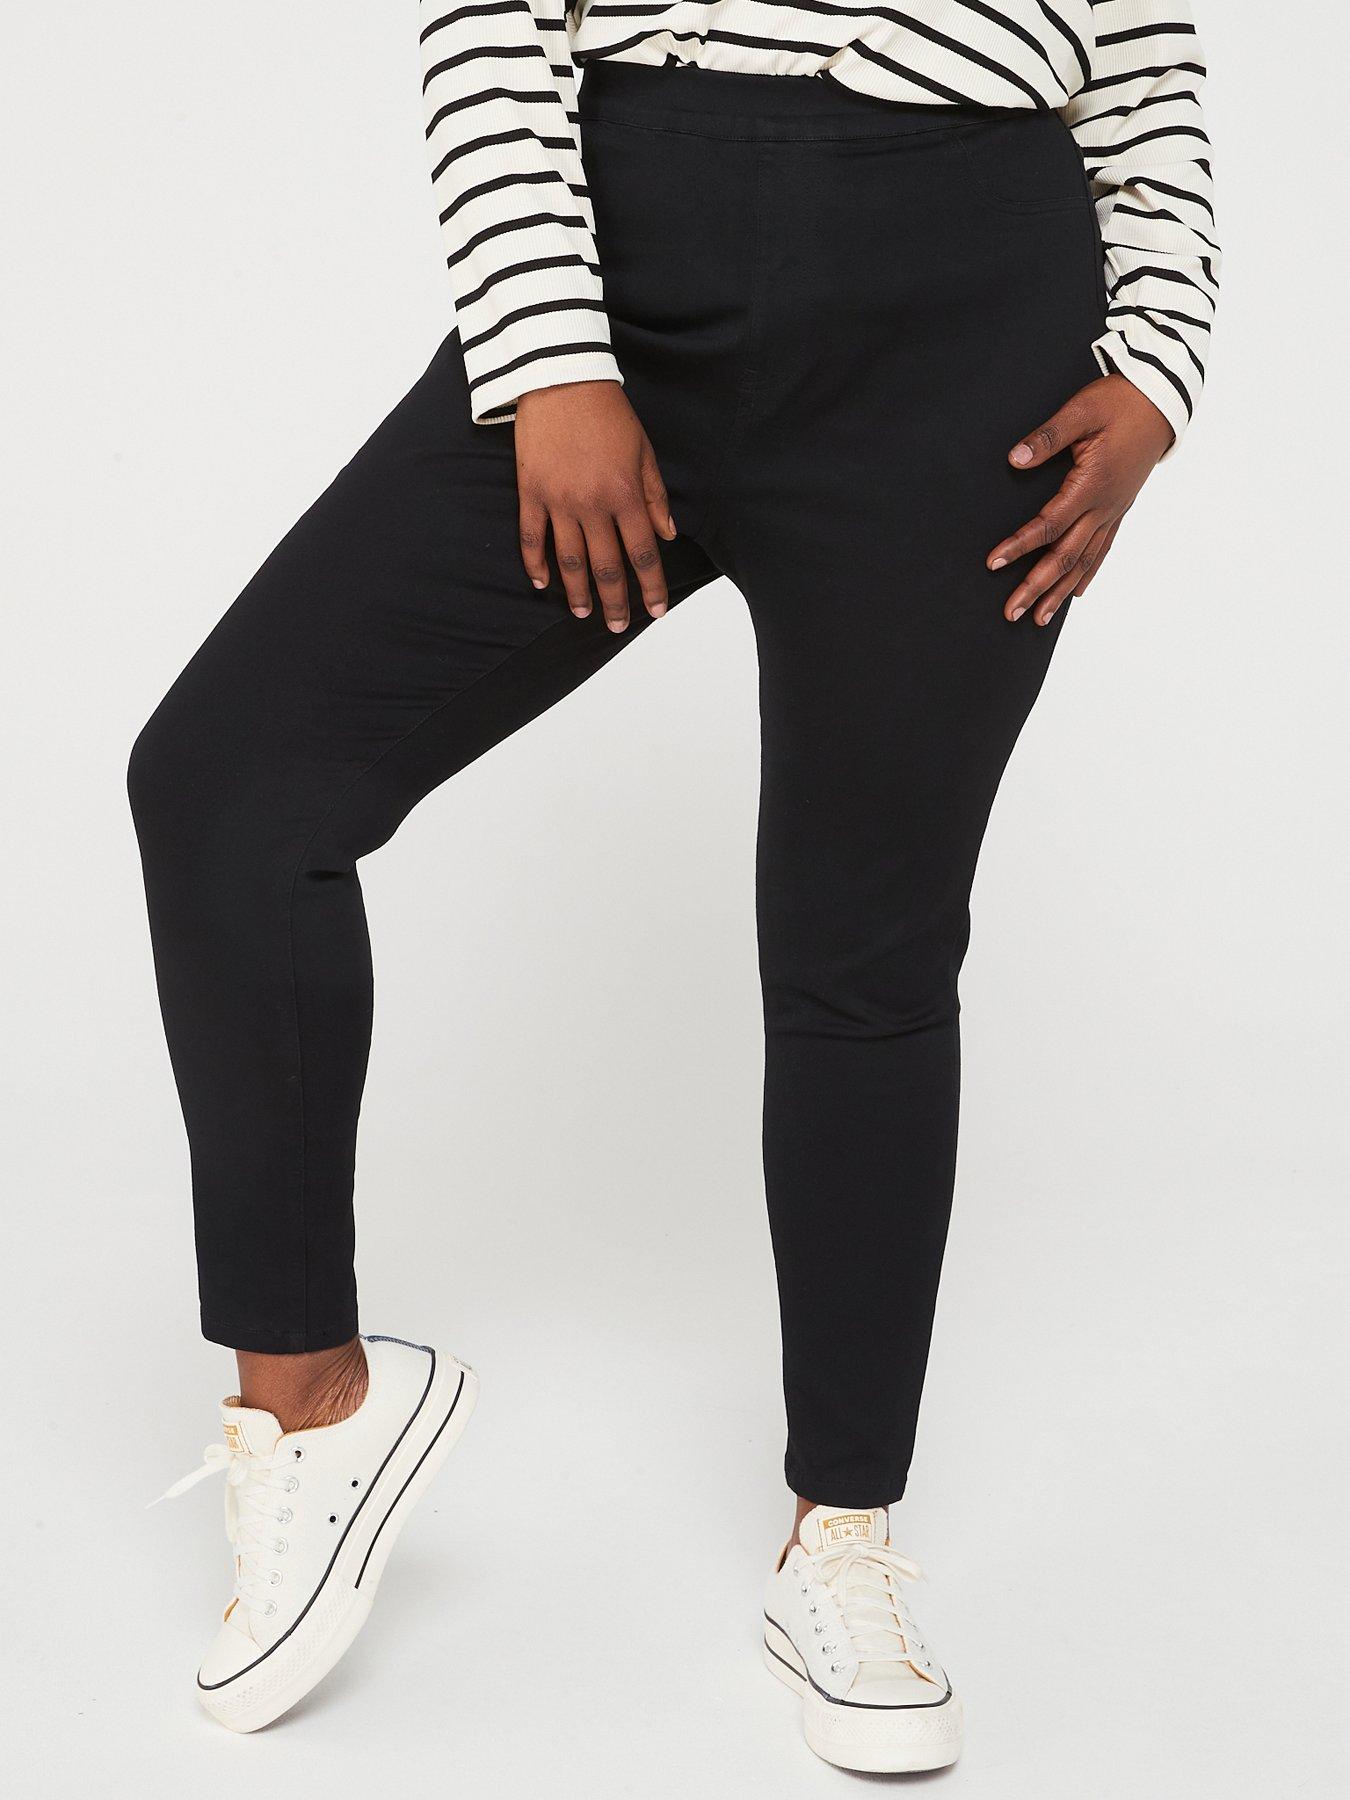 Buy Women's High Waist Stretch Skinny Denim Capri Jeggings with Pockets  Reg-Plus Size (Large, Capri-Navy) at Amazon.in